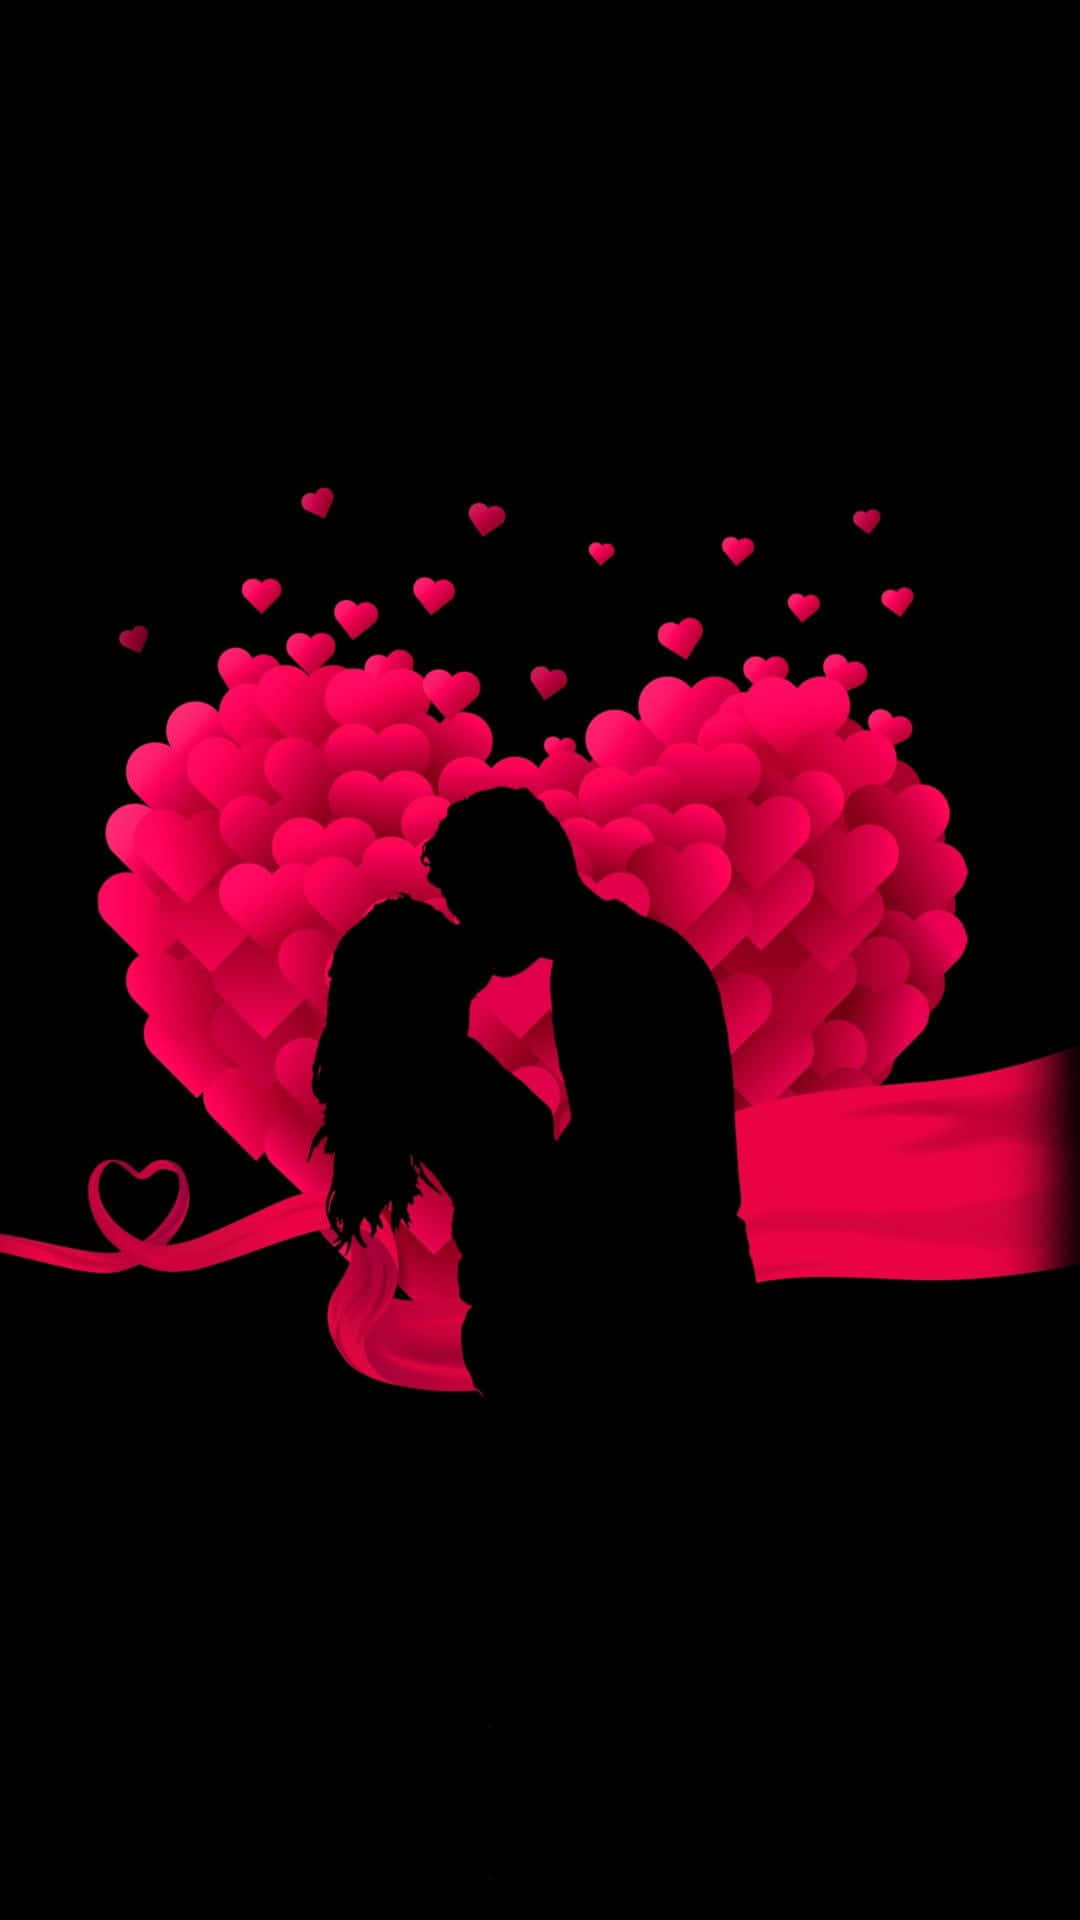 Romantic Couple Silhouette Love Heart Background Wallpaper